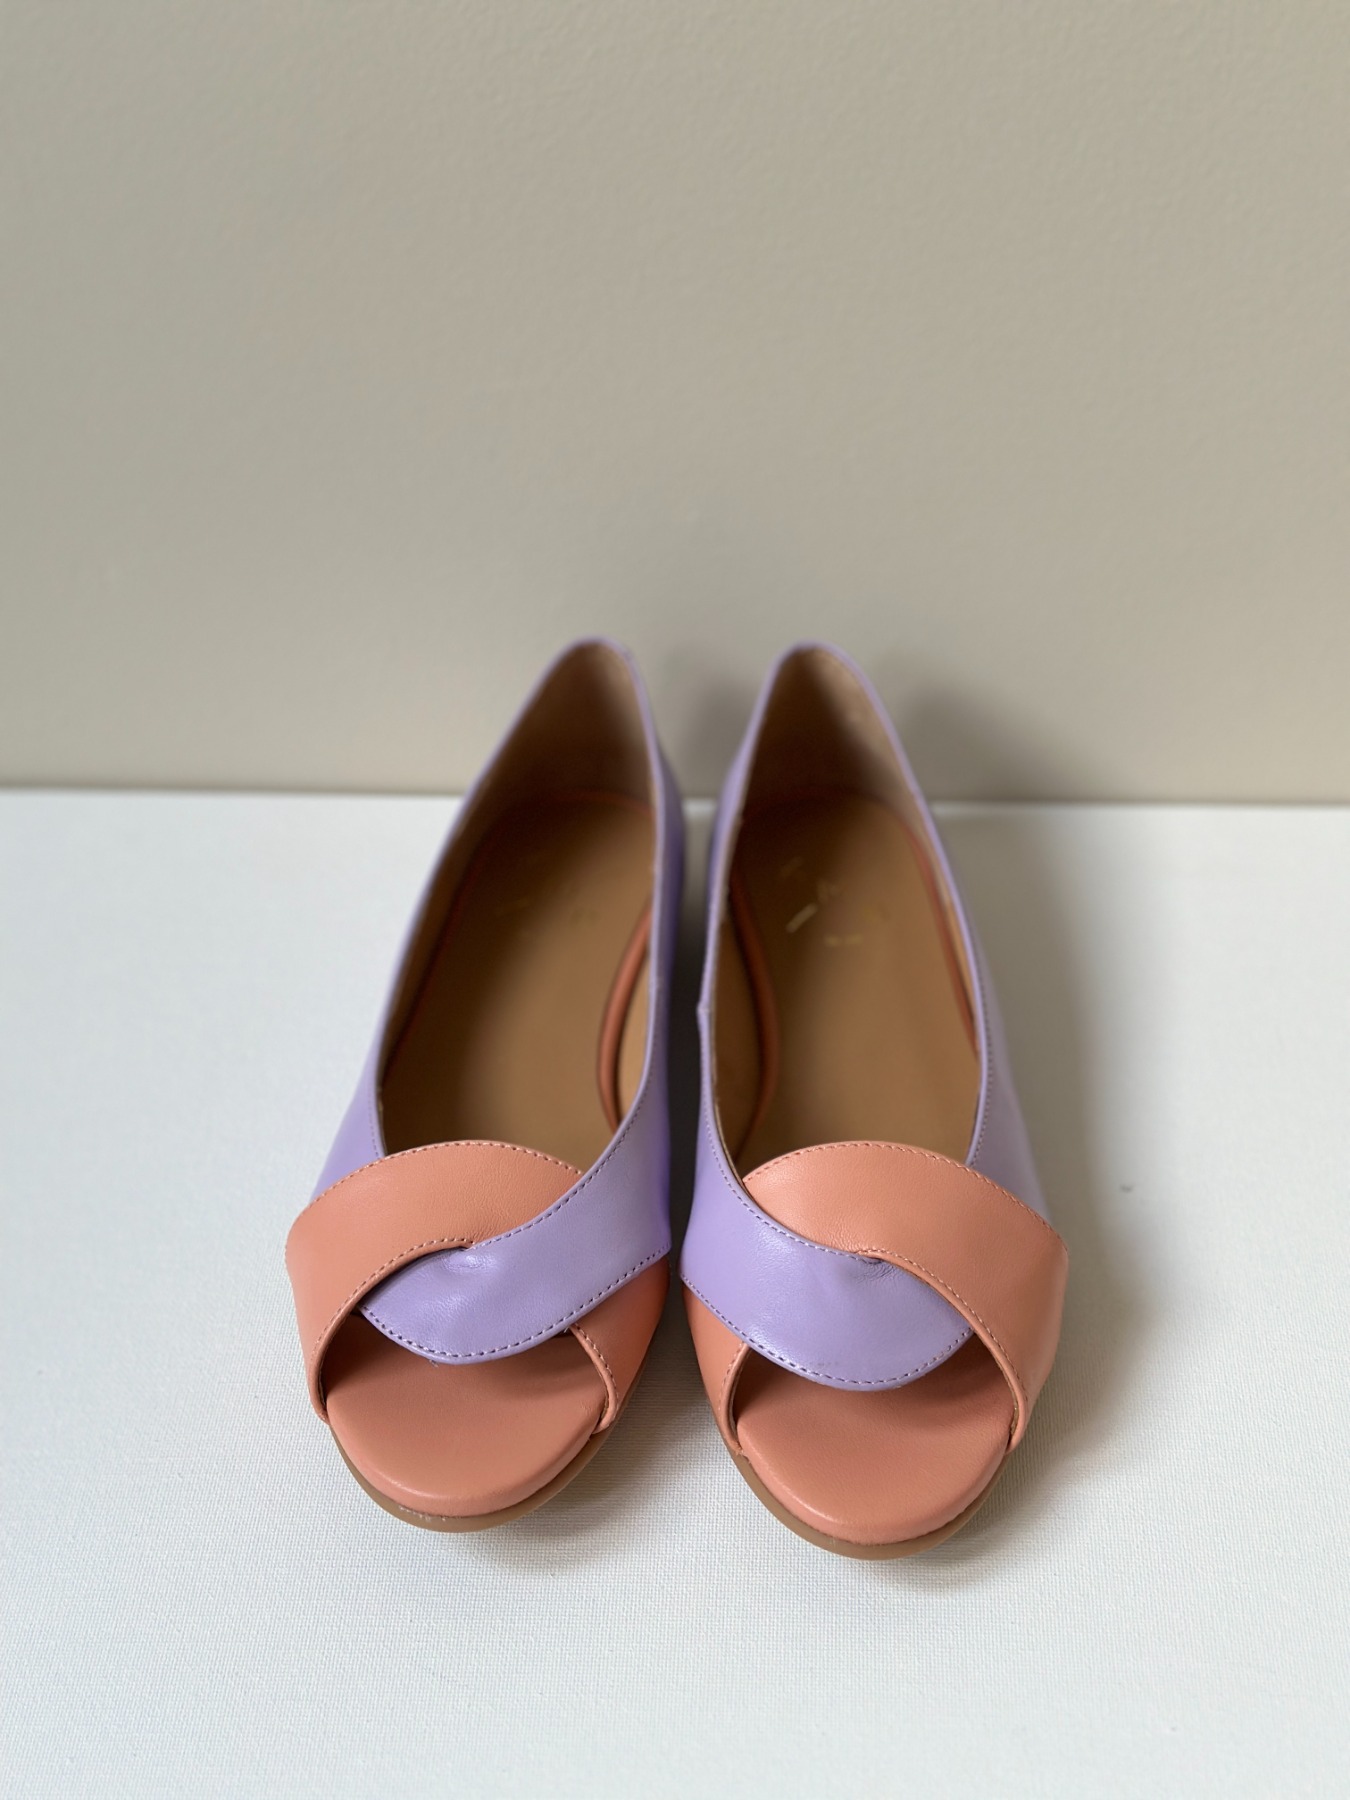 KMB Shoes - Ballerina SOFIE - Apricot/Lila 2